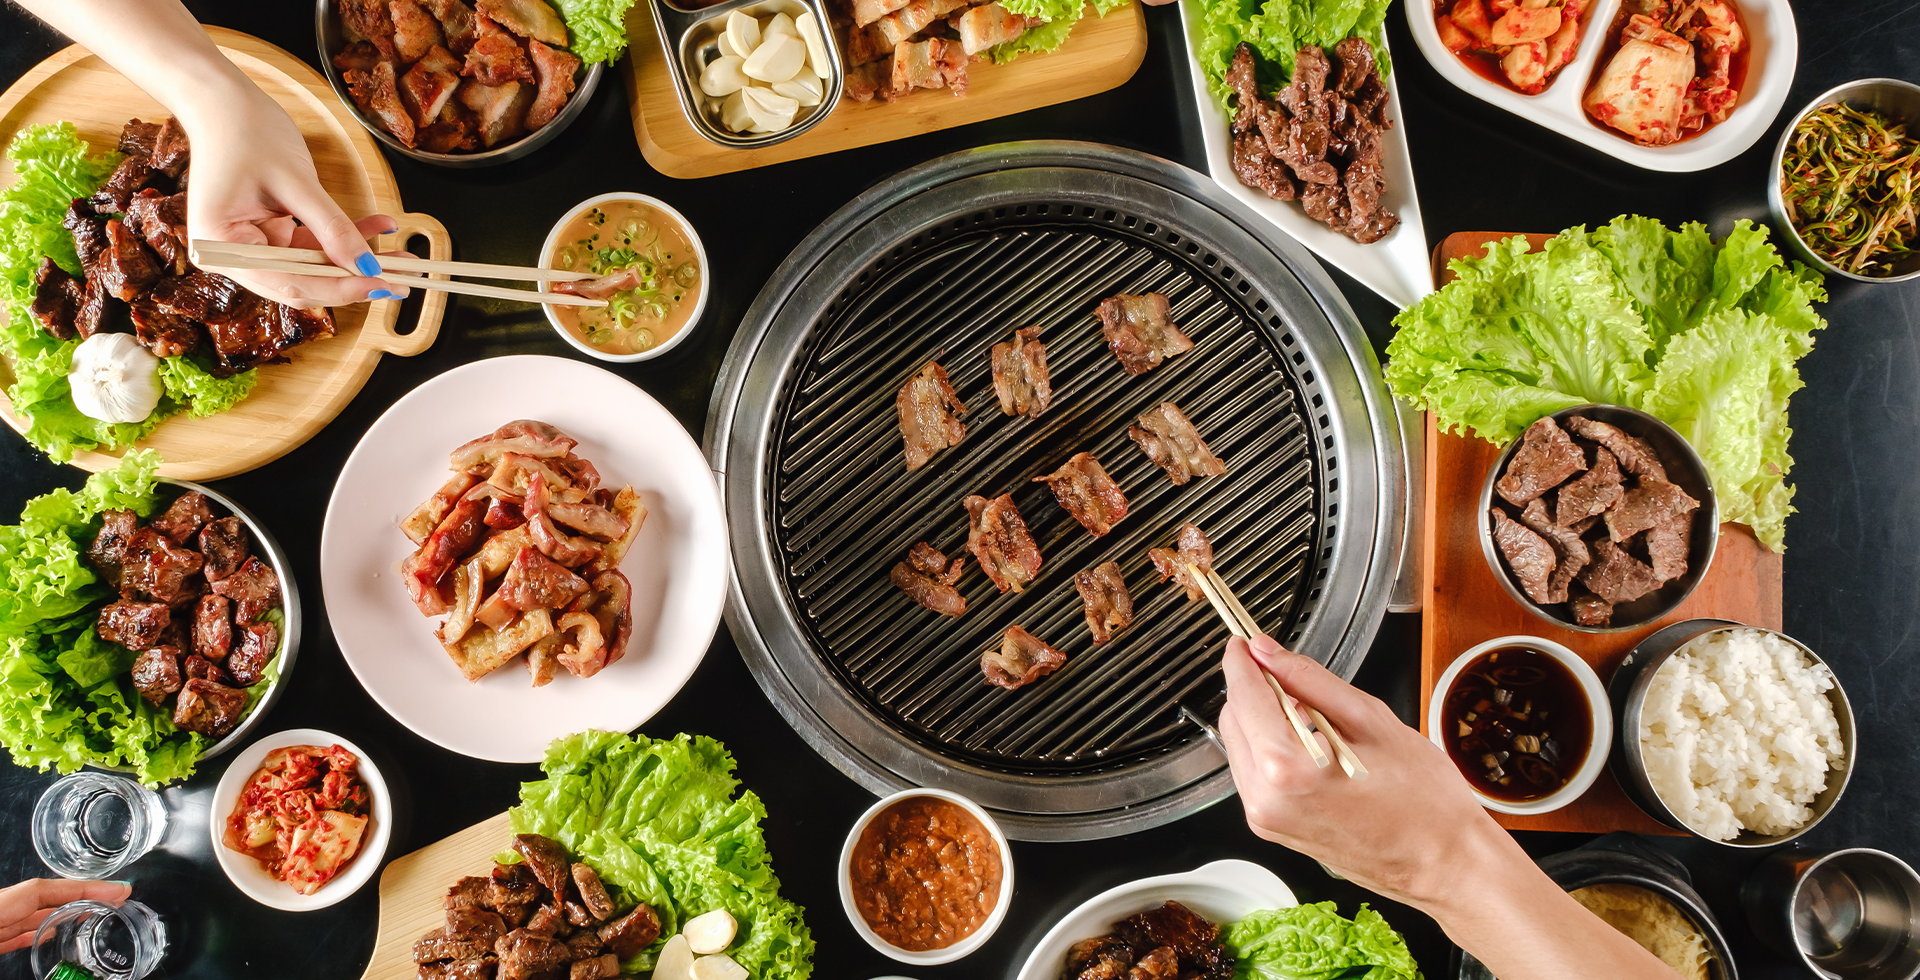 Royal in Can – MakChang Korean Barbecue